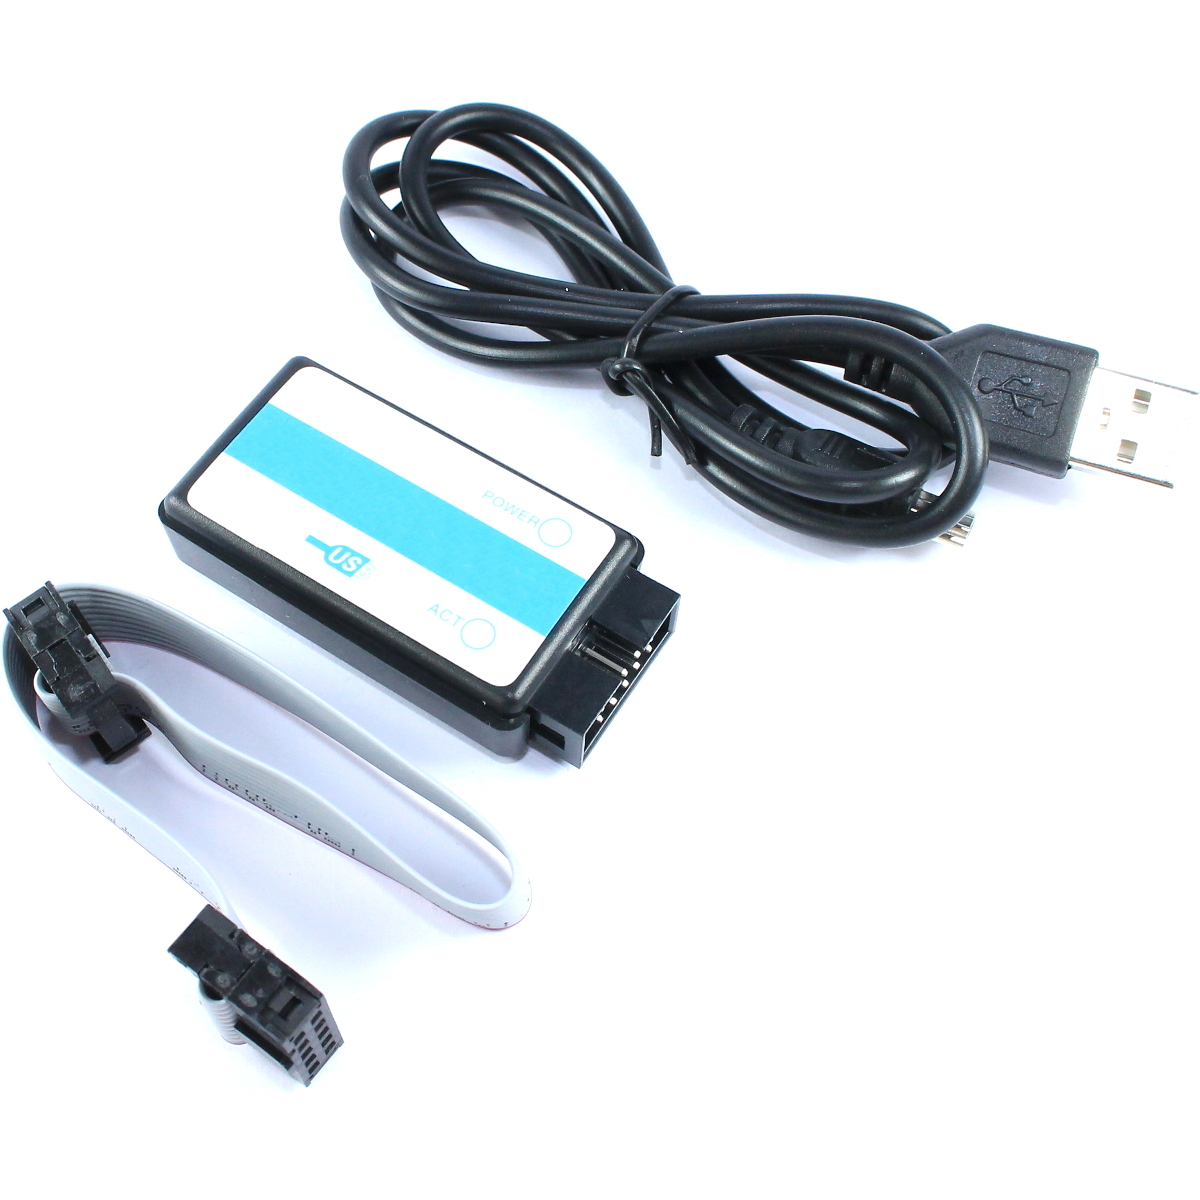 USB Programmer for Altera Image 1